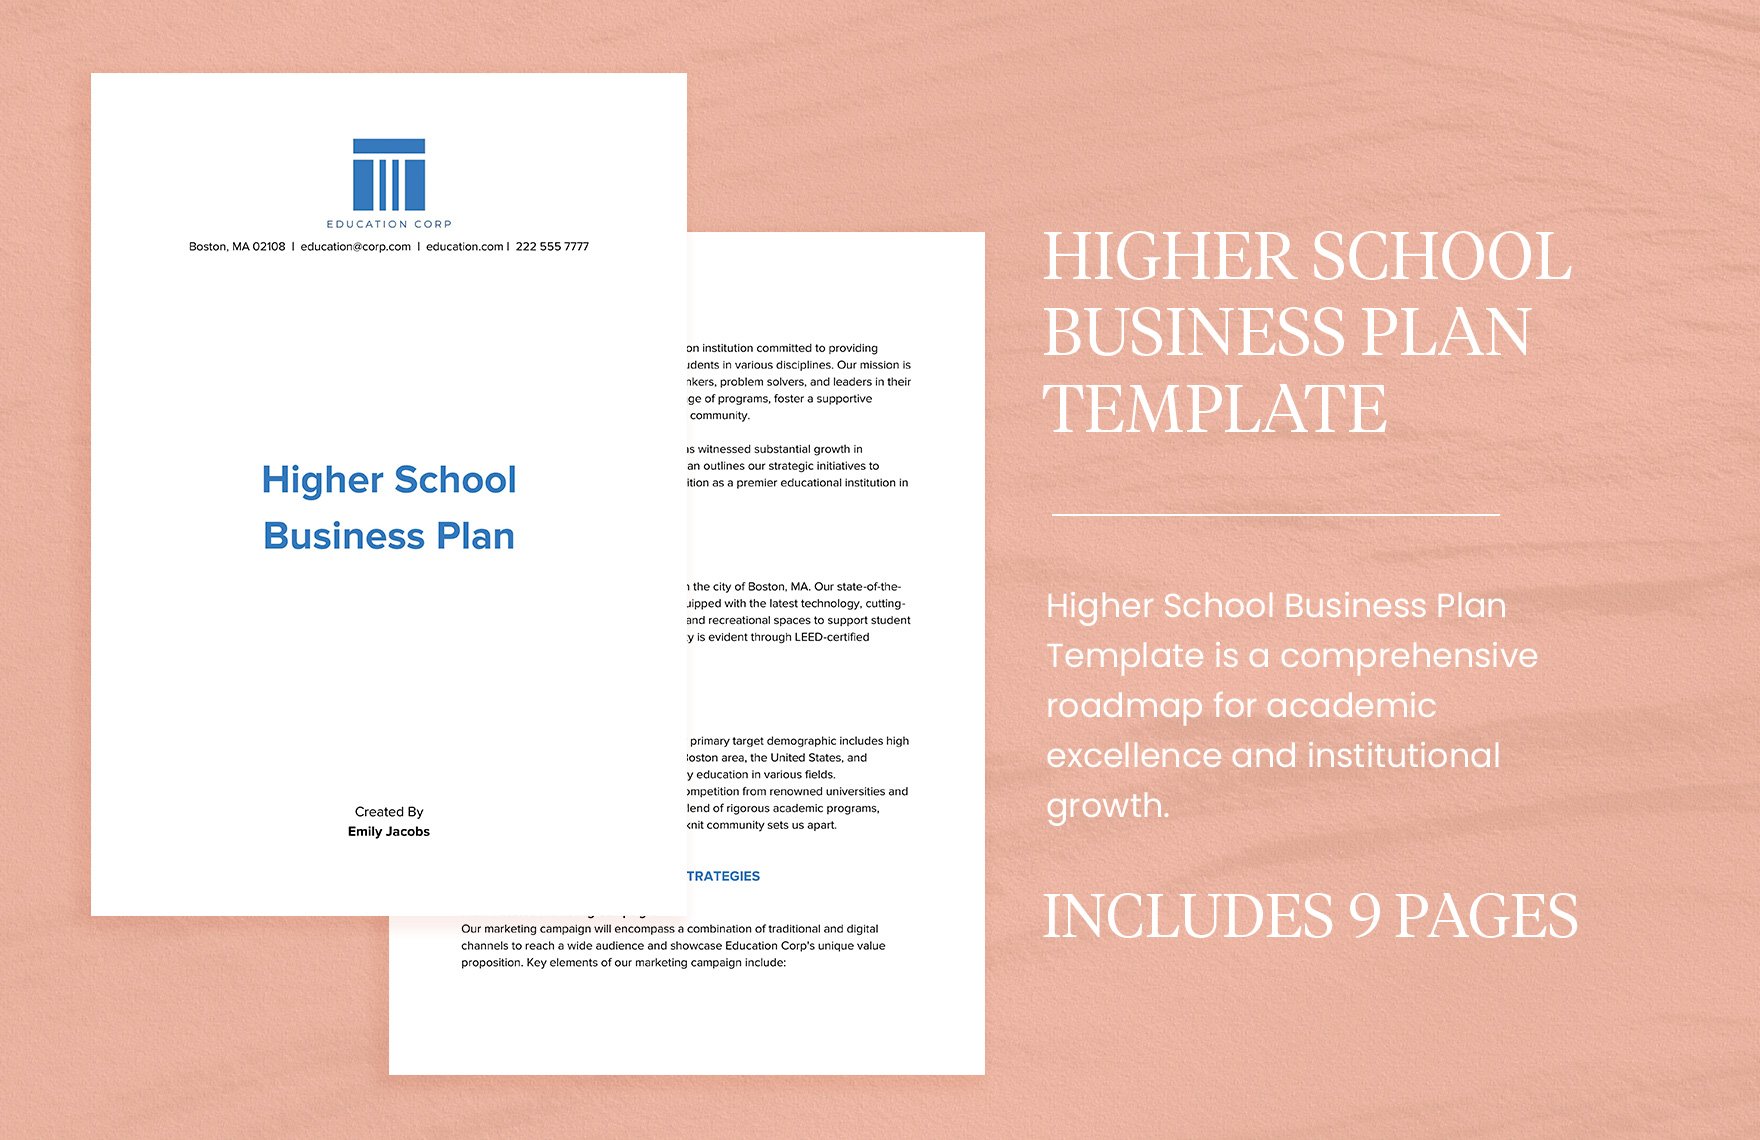 online education business plan pdf